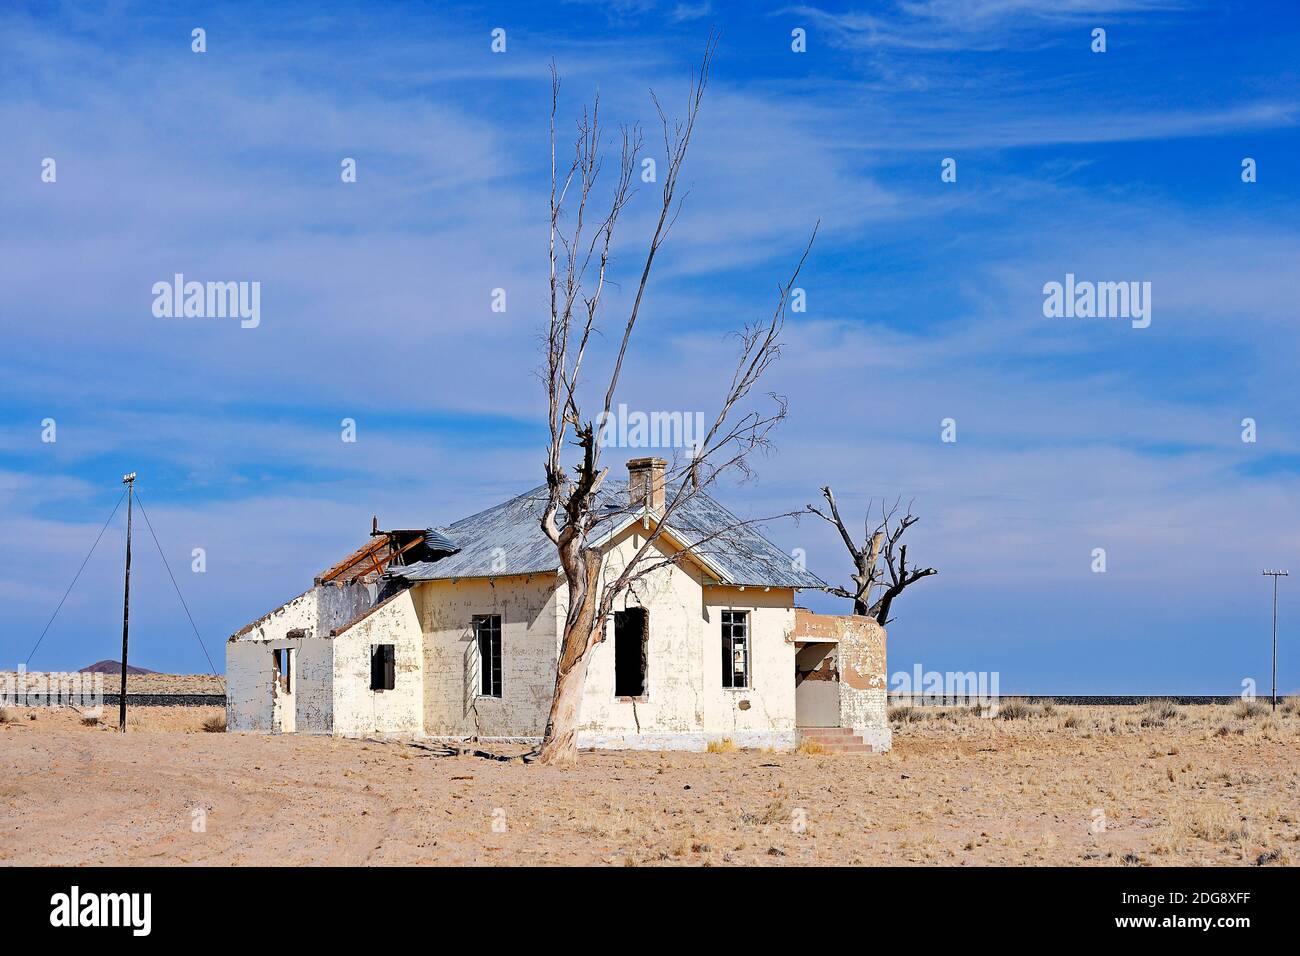 Verfallenes Bahnshofsgebäude von Garub bei Aus, Namibia, Afrika Stock Photo